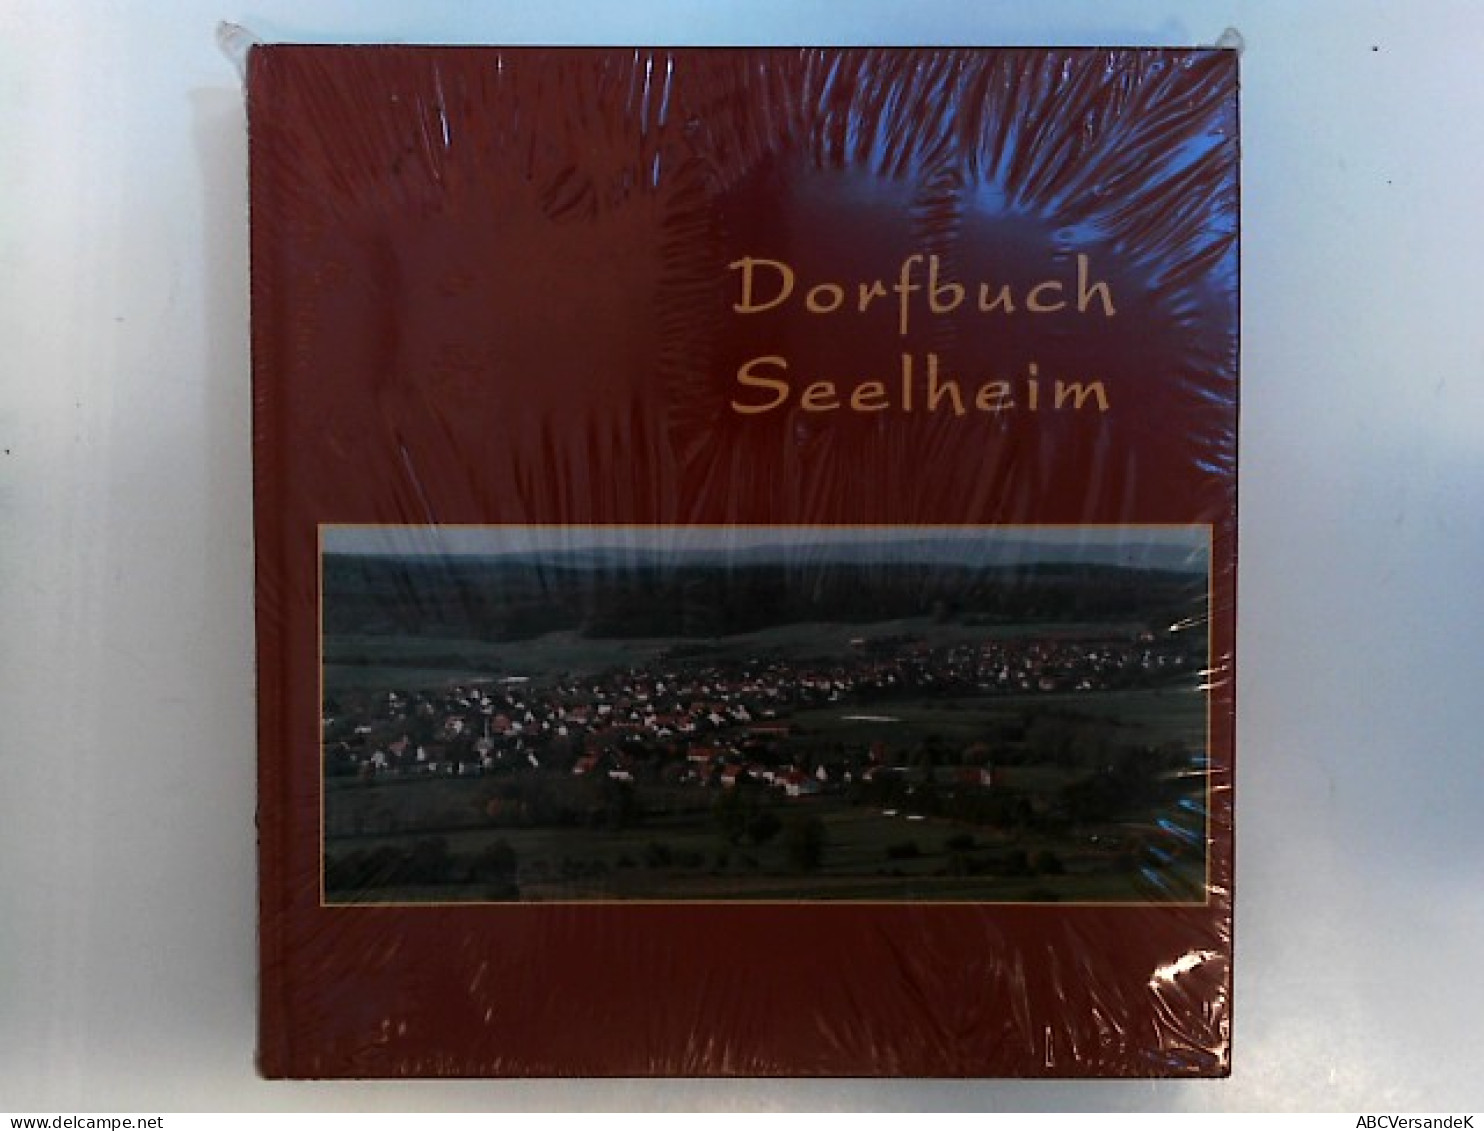 Dorfbuch Seelheim - Germany (general)